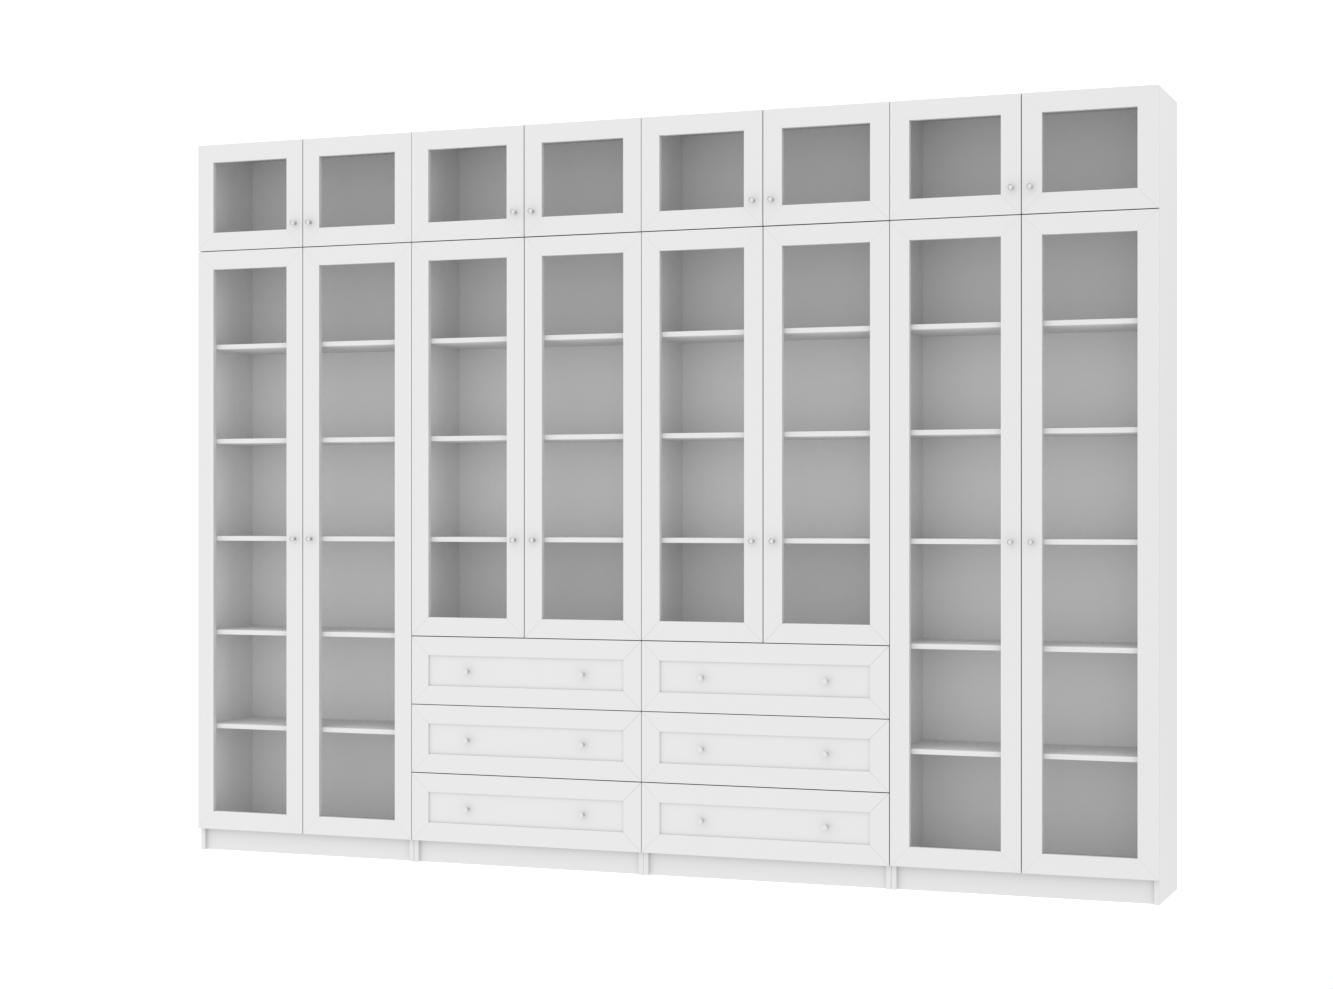 Книжный шкаф Билли 372 white ИКЕА (IKEA) изображение товара